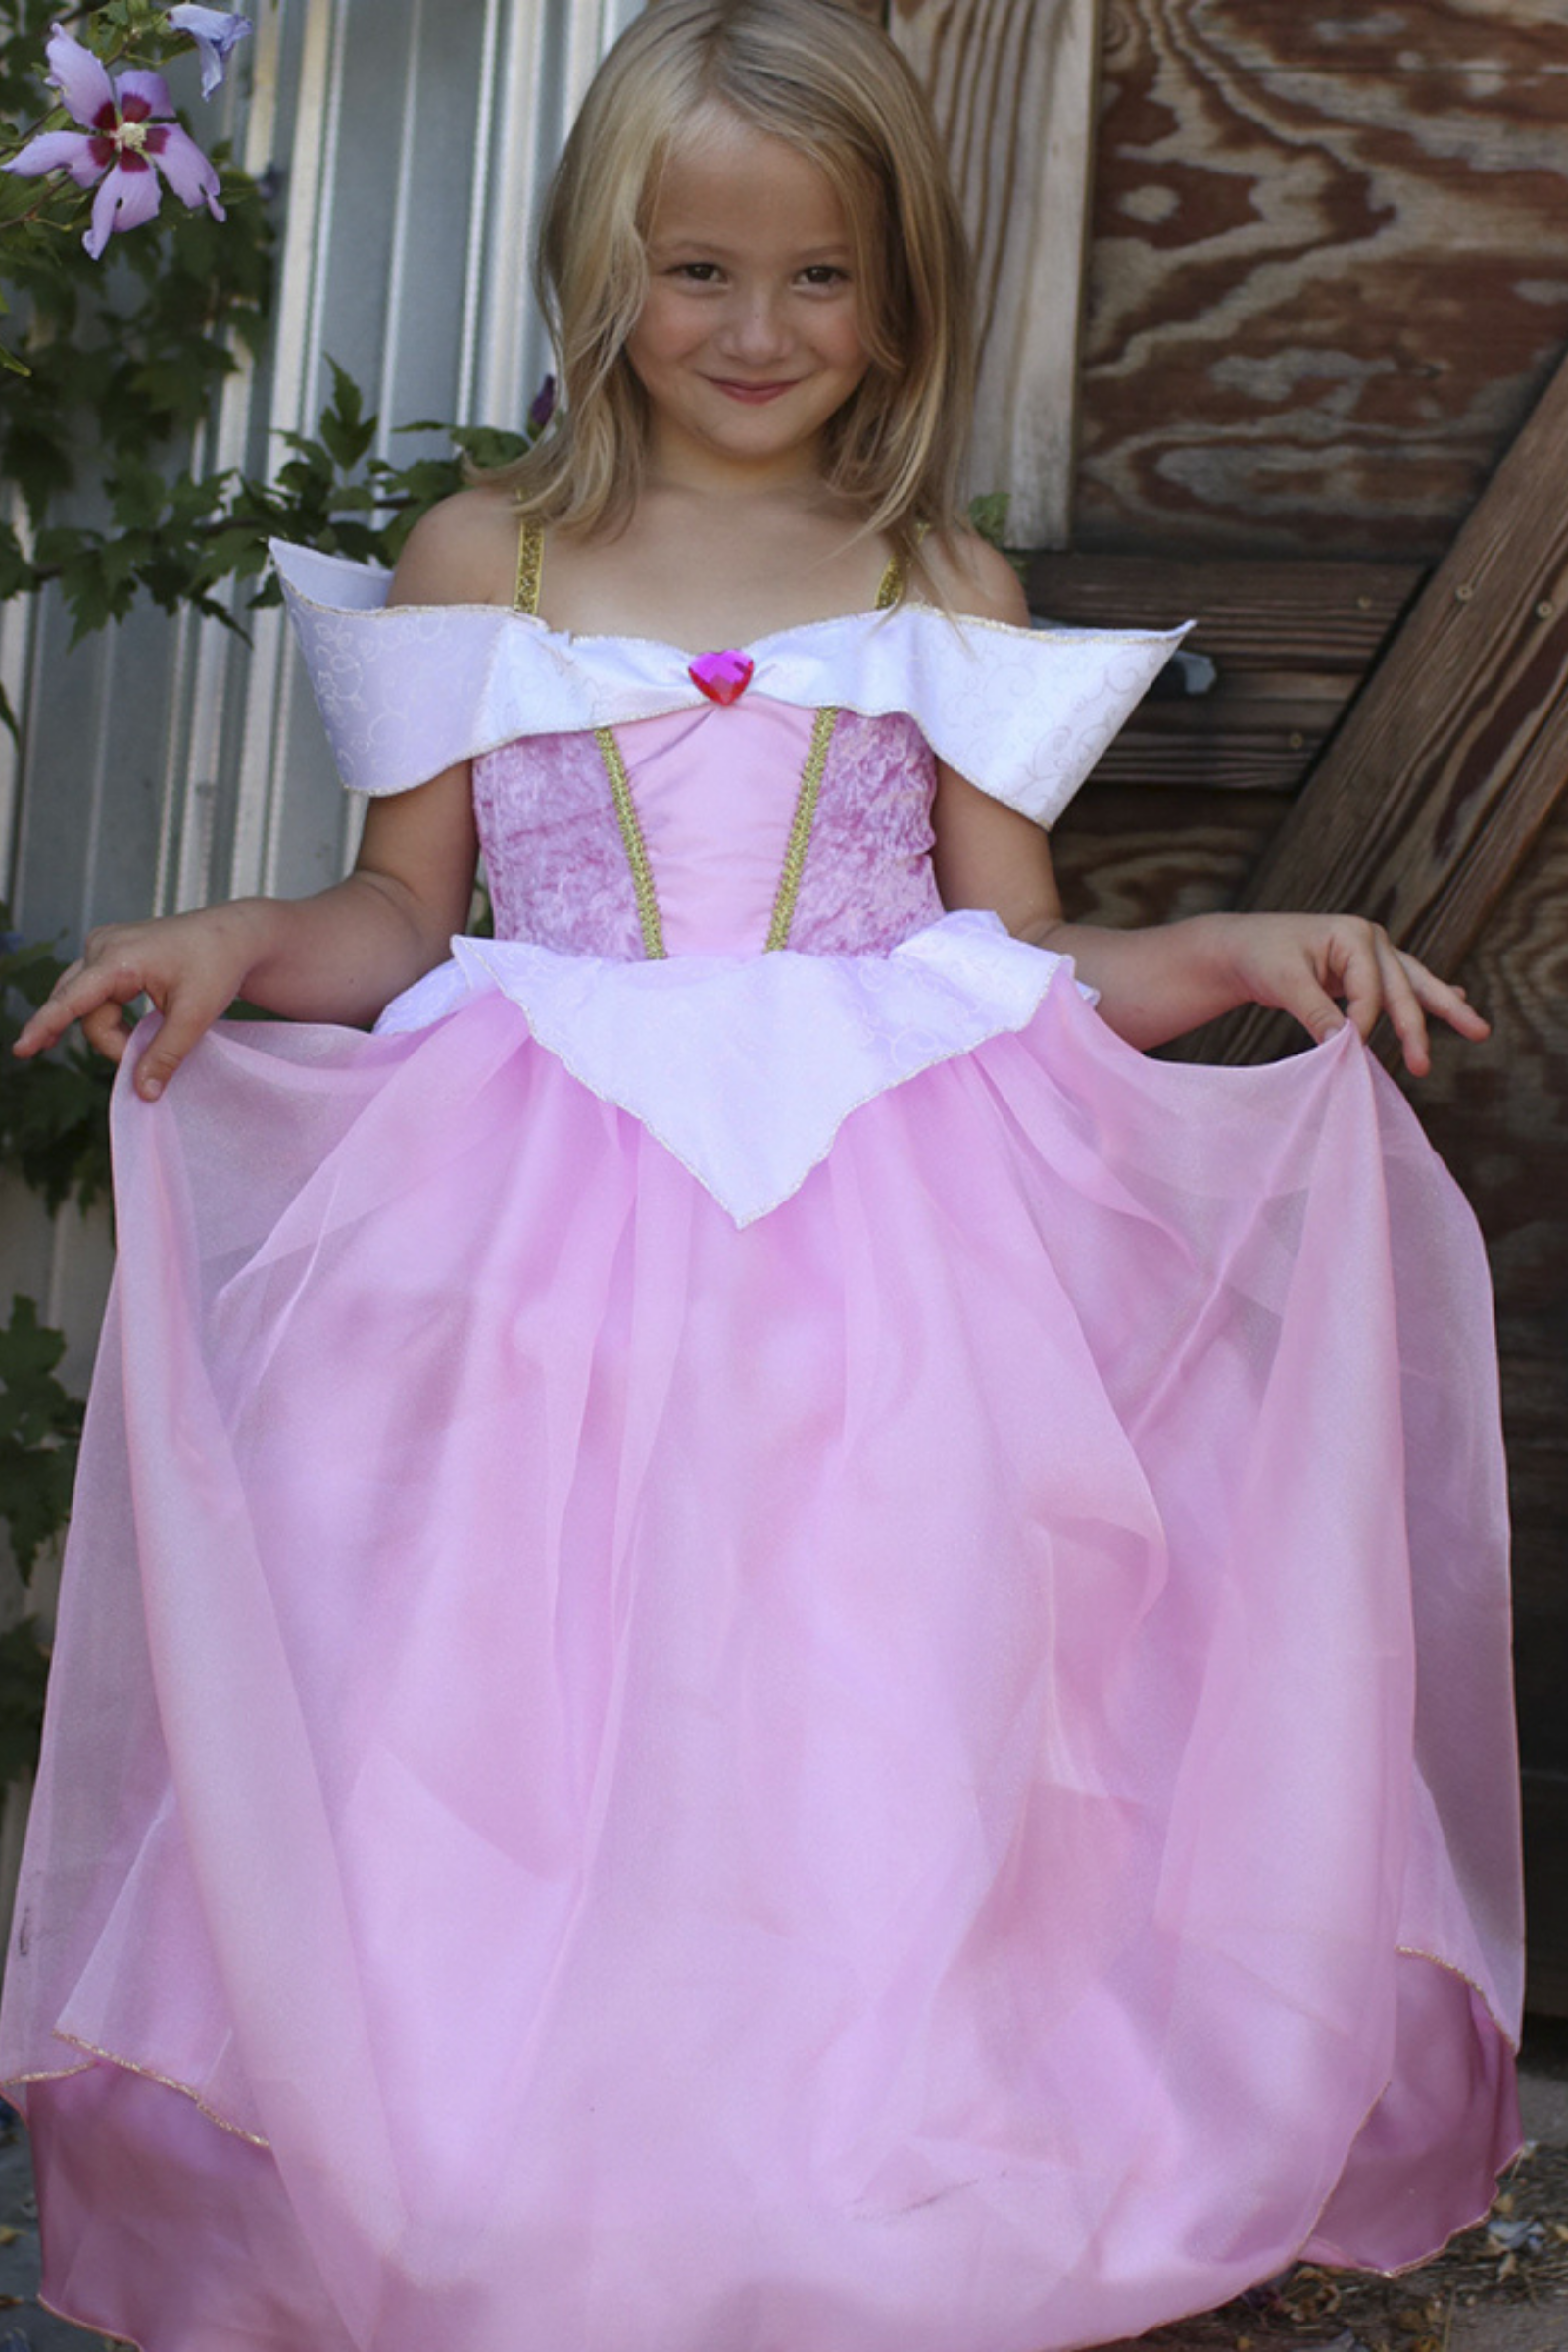 Great Pretenders Costume - Princess Dress - Rapunzel - Purple